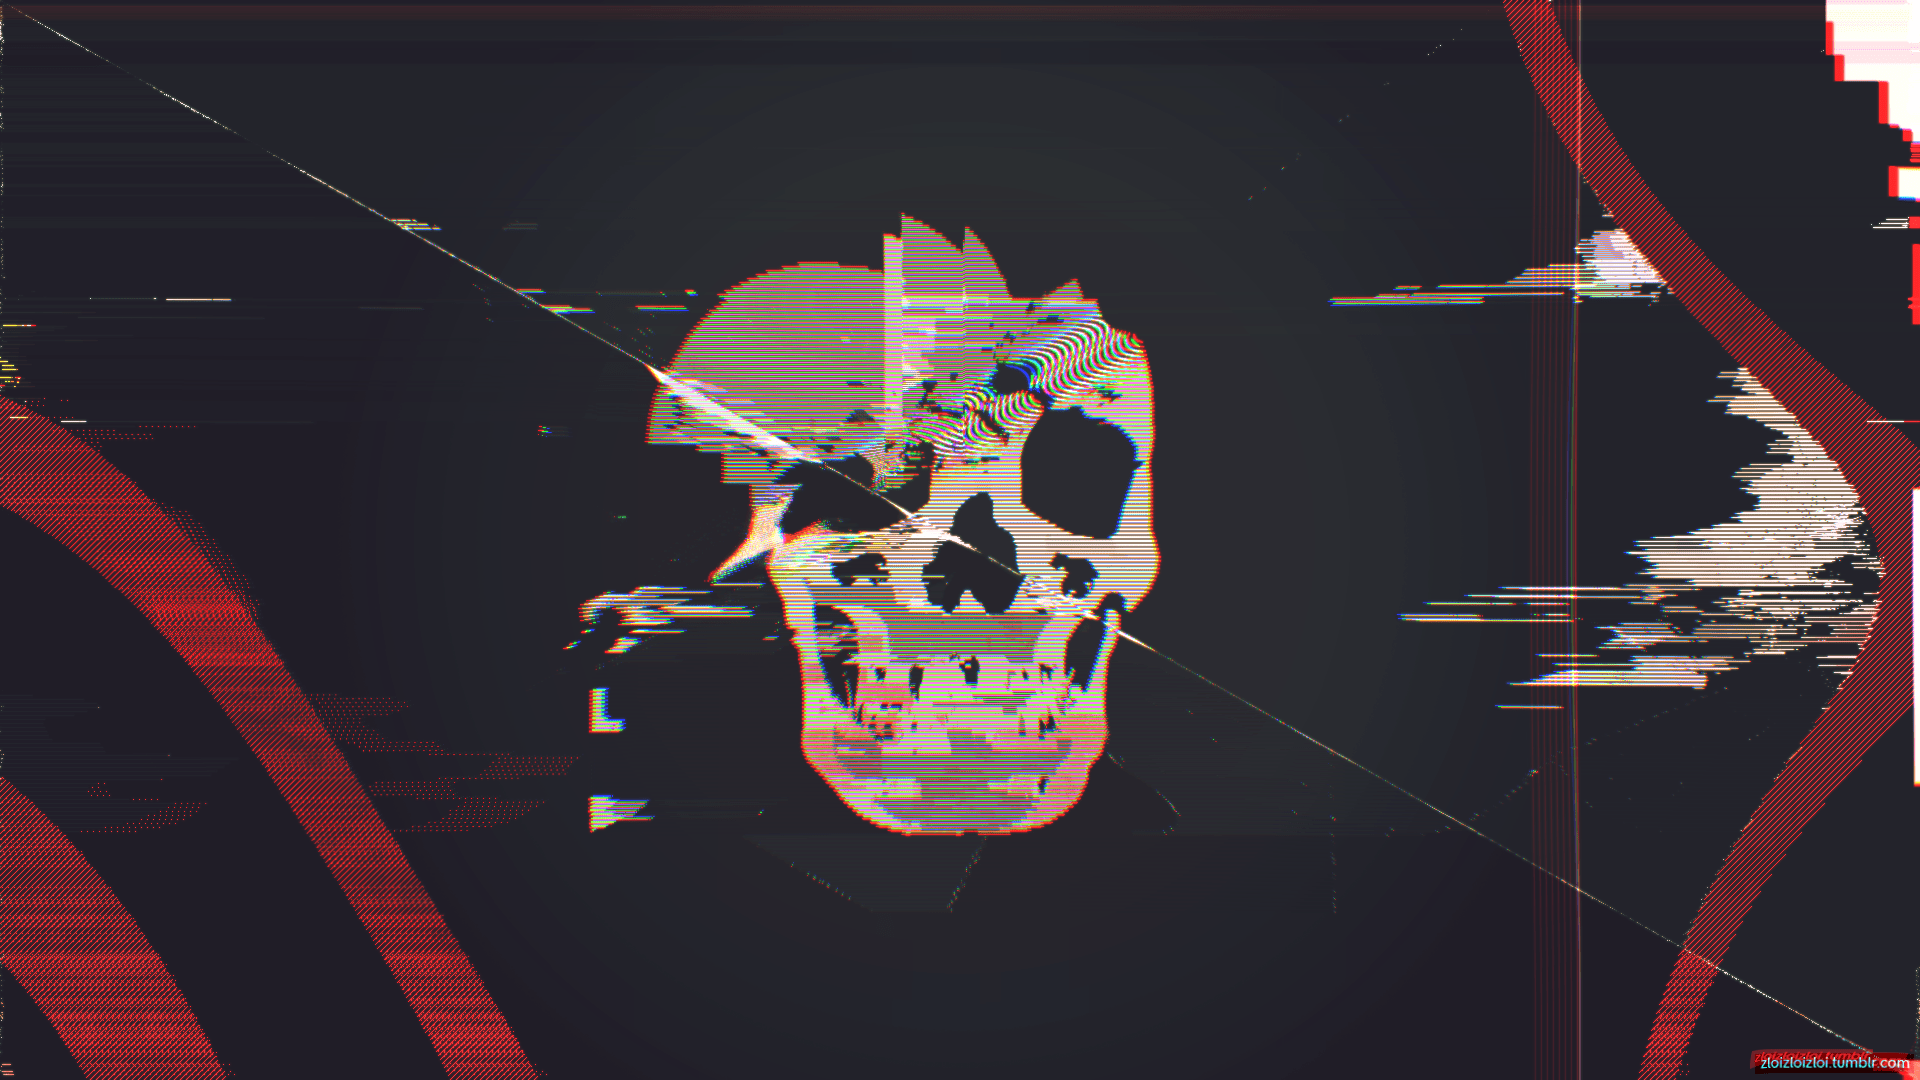 1920x1080 glitch art skull abstract cyberpunk webpunk wallpaper JPG 625 kB Gallery HD Wallpaper